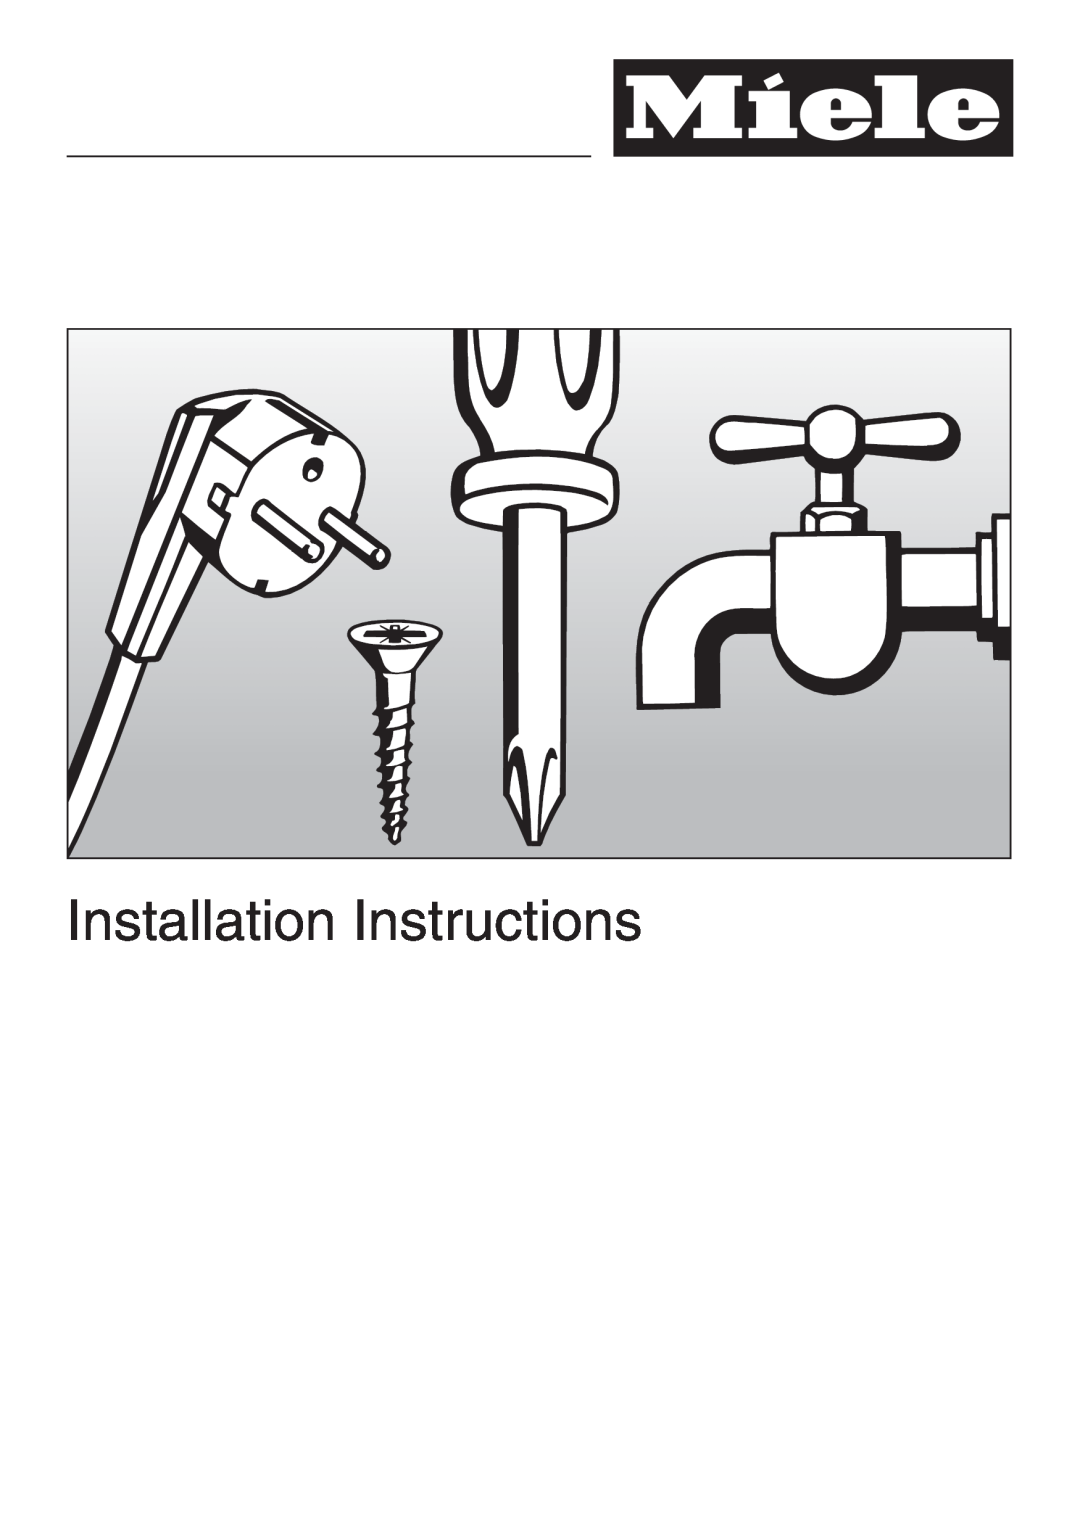 Miele DA239-3 installation instructions Installation Instructions 